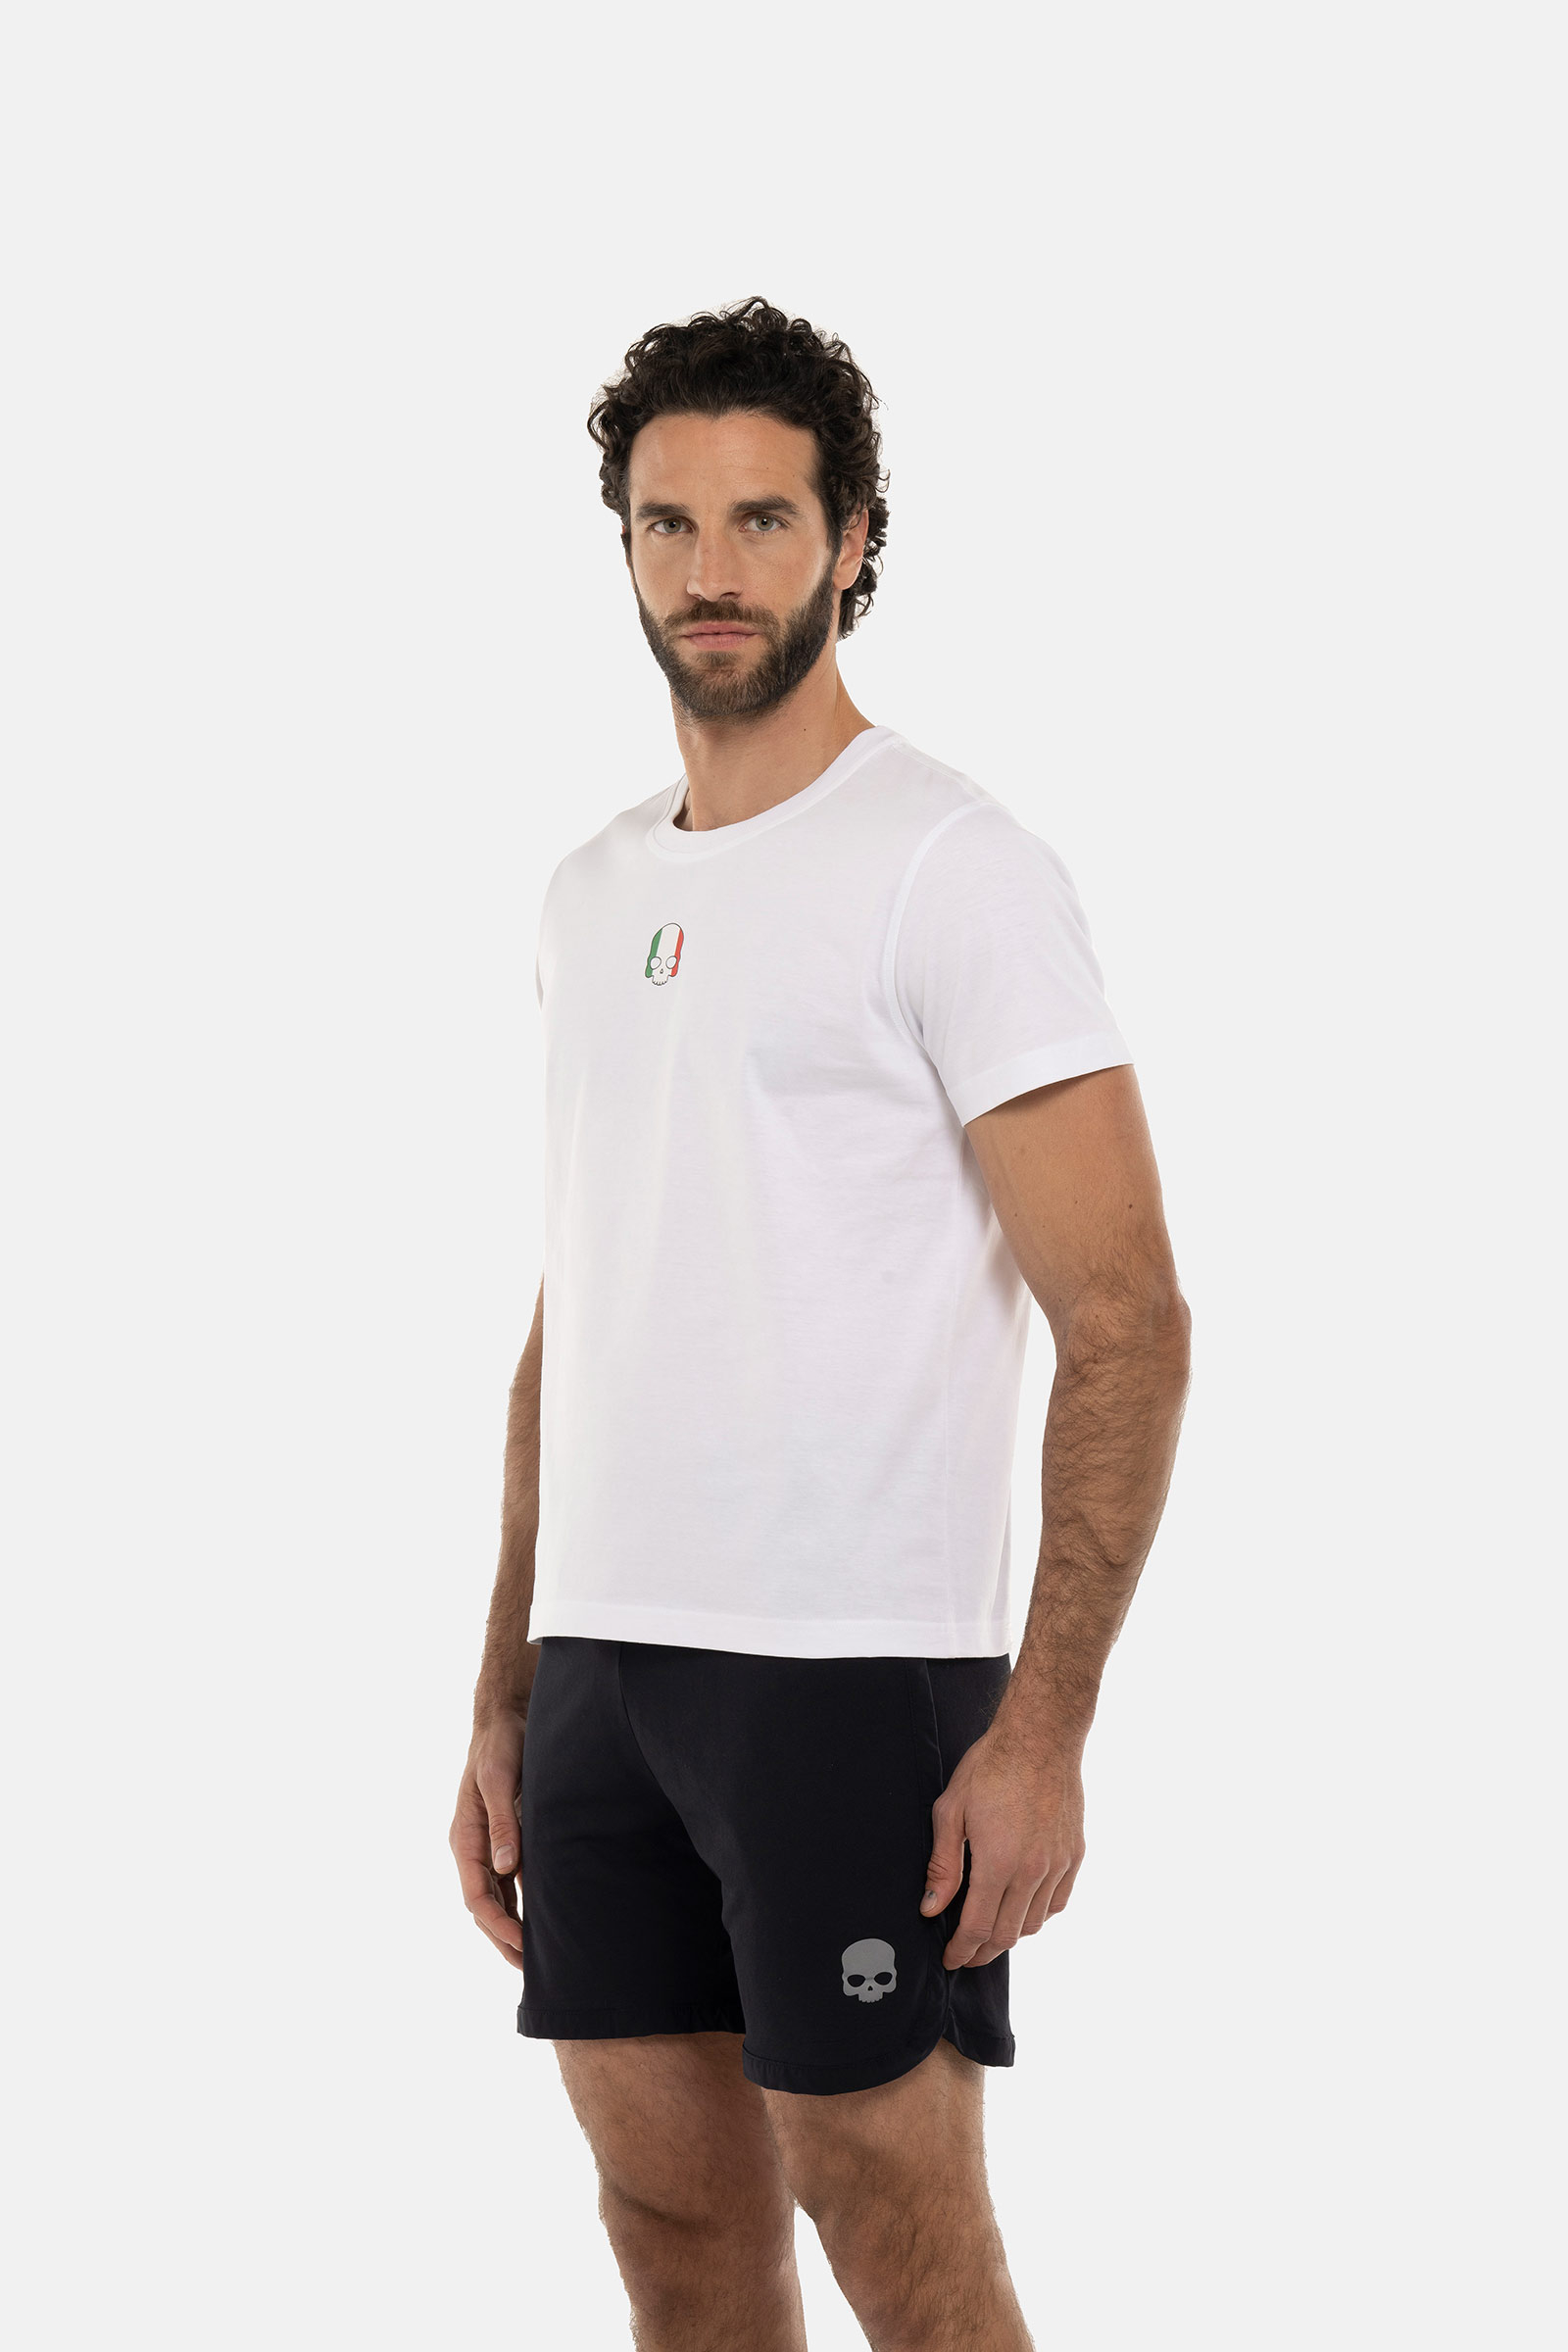 MATCH T-SHIRT - WHITE - Hydrogen - Luxury Sportwear